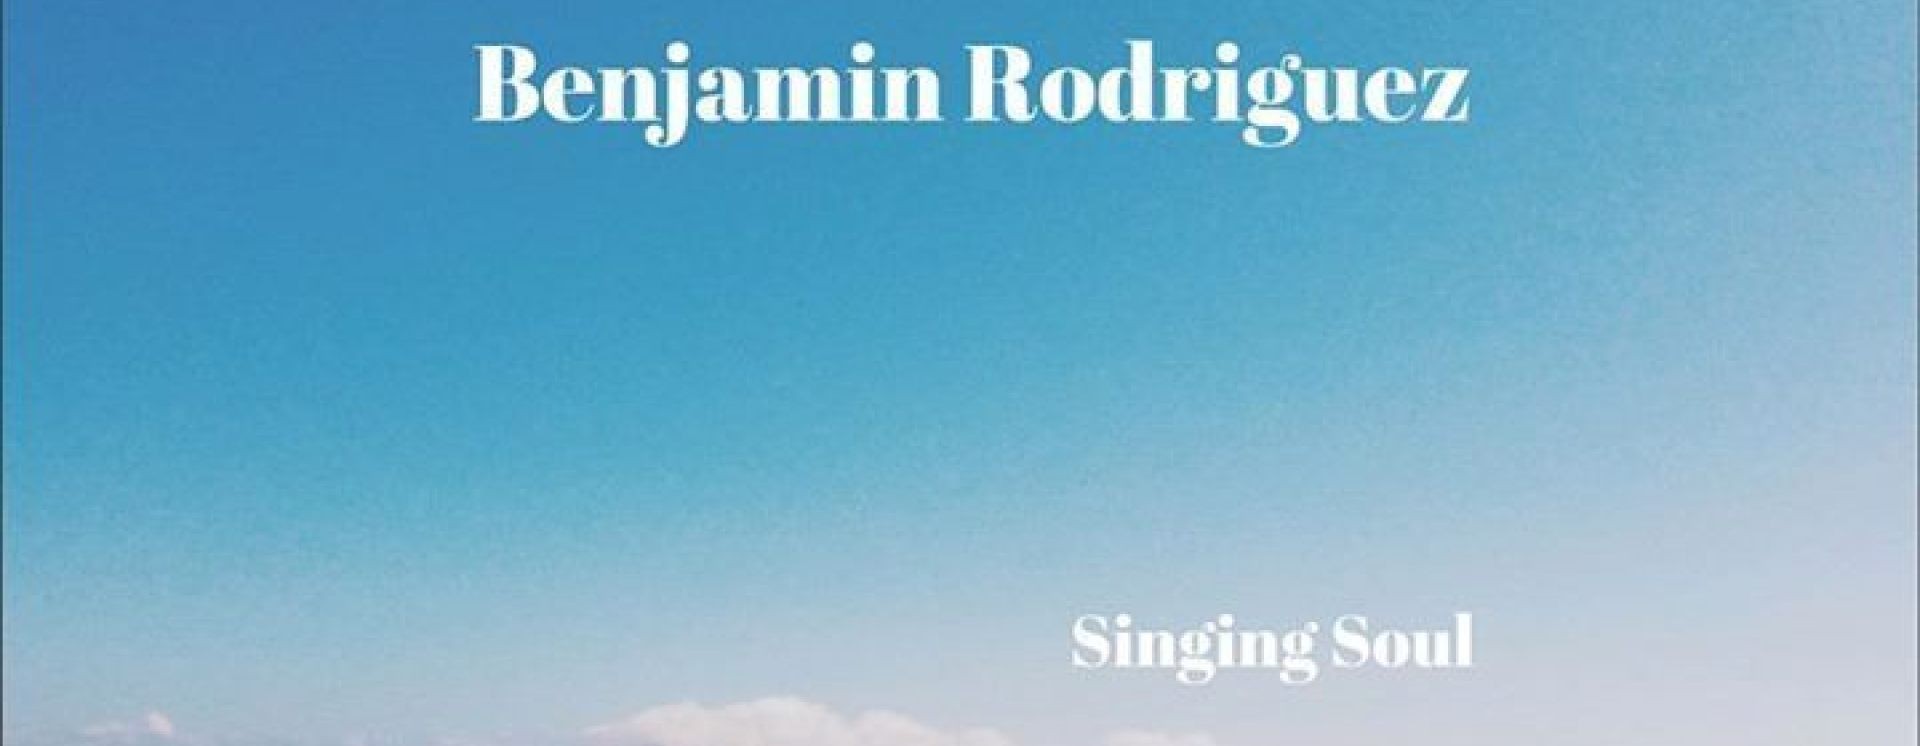 Stream Benjamin Rodriguez music